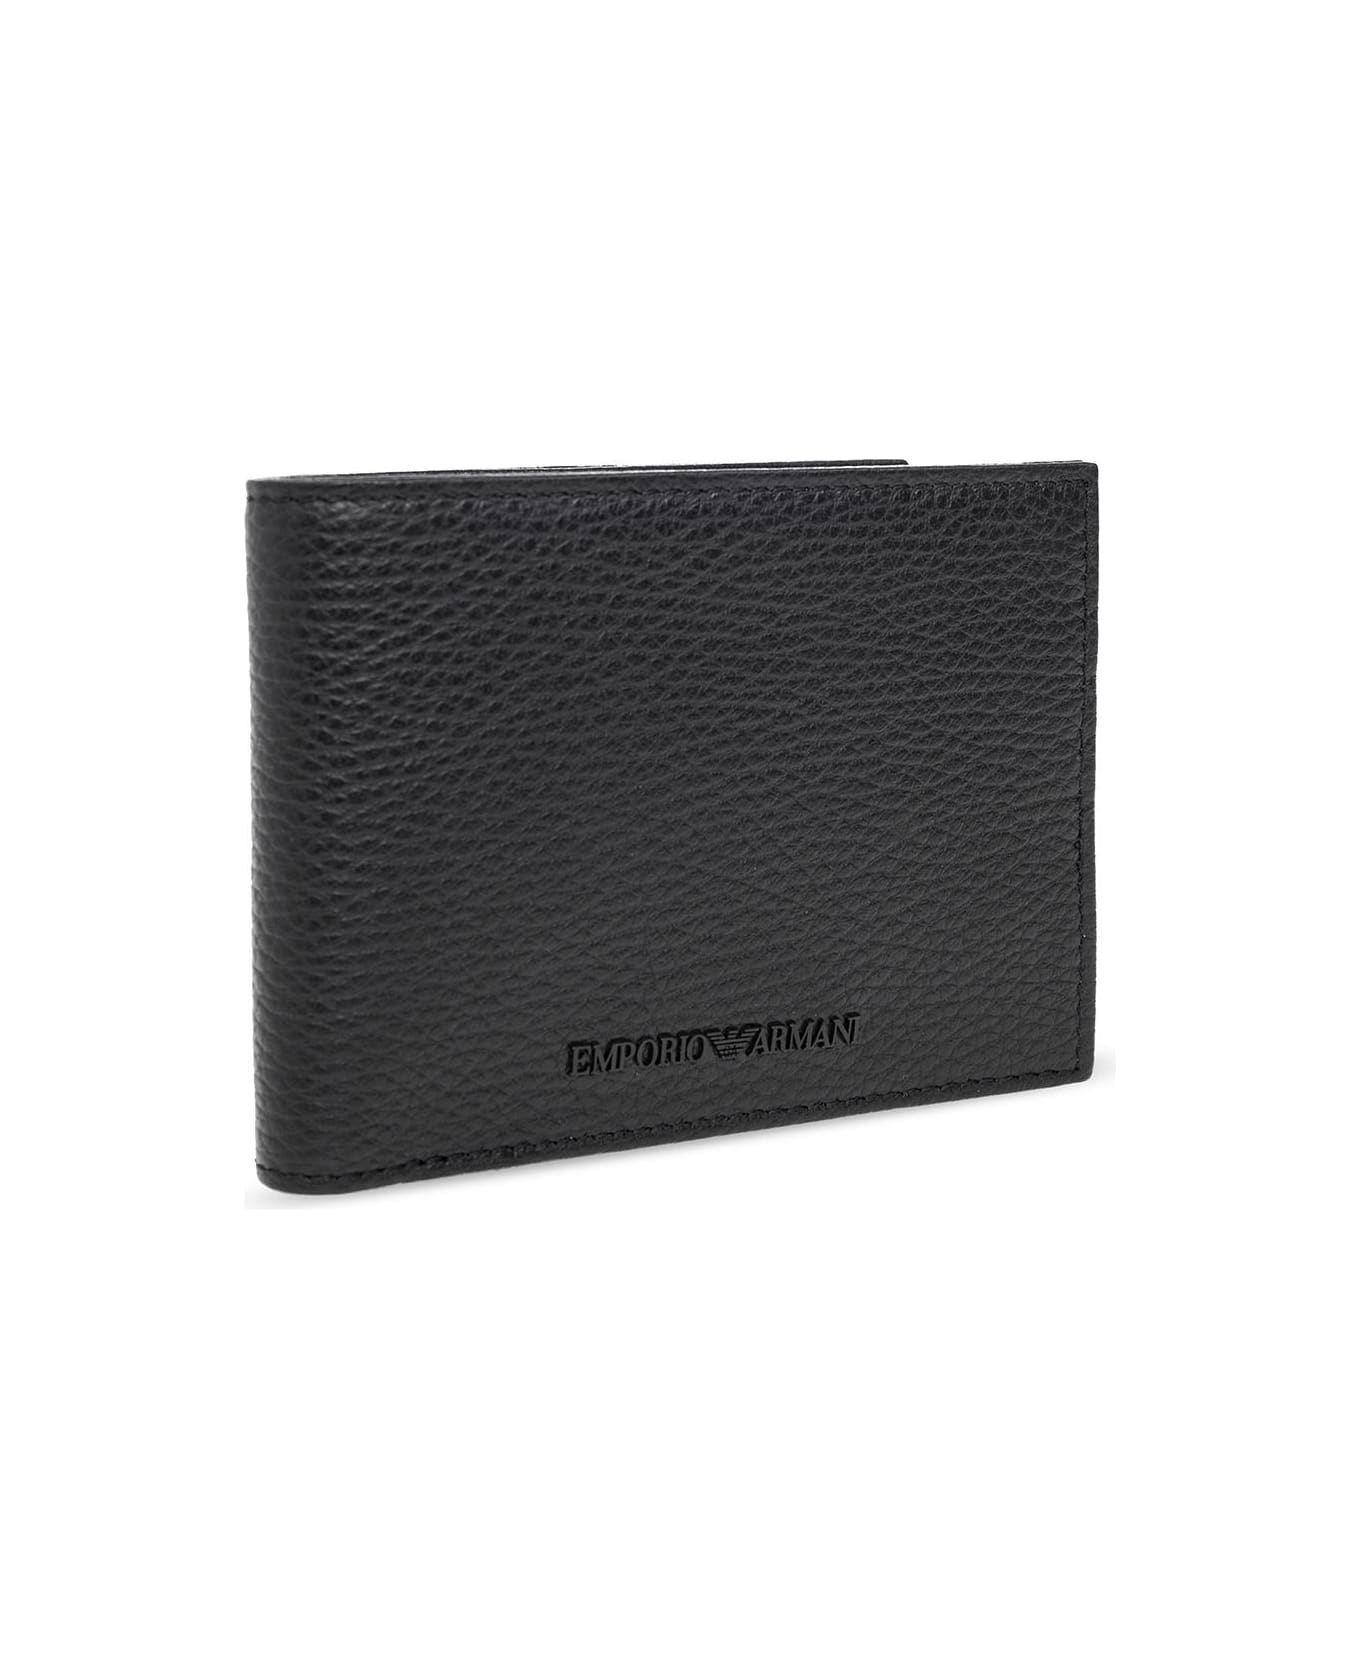 Emporio Armani Wallet And Card Holder Case - Nero